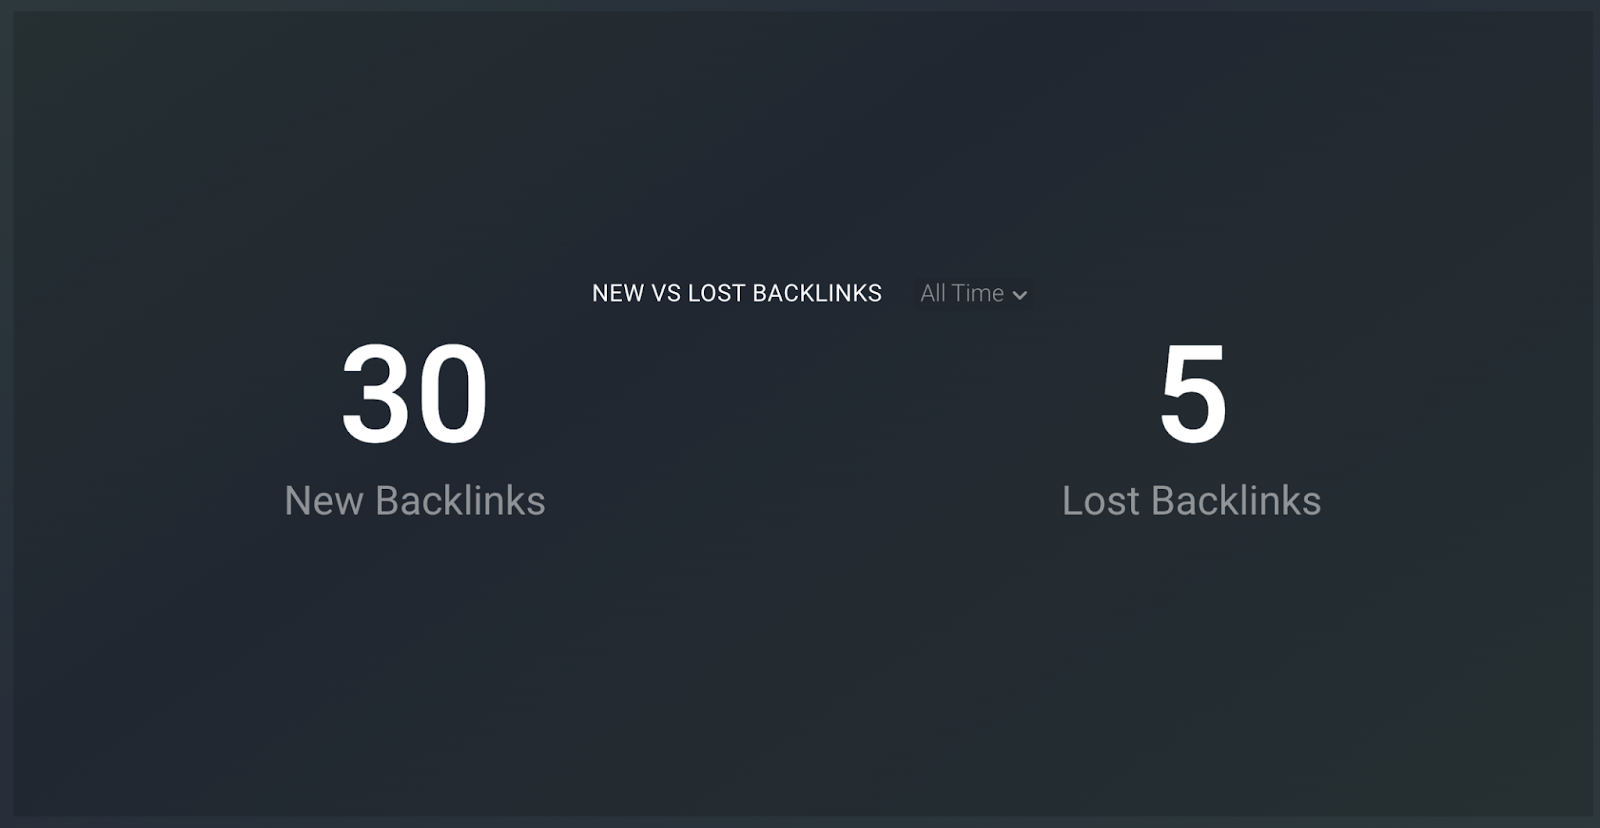 New / Lost Backlinks visualization